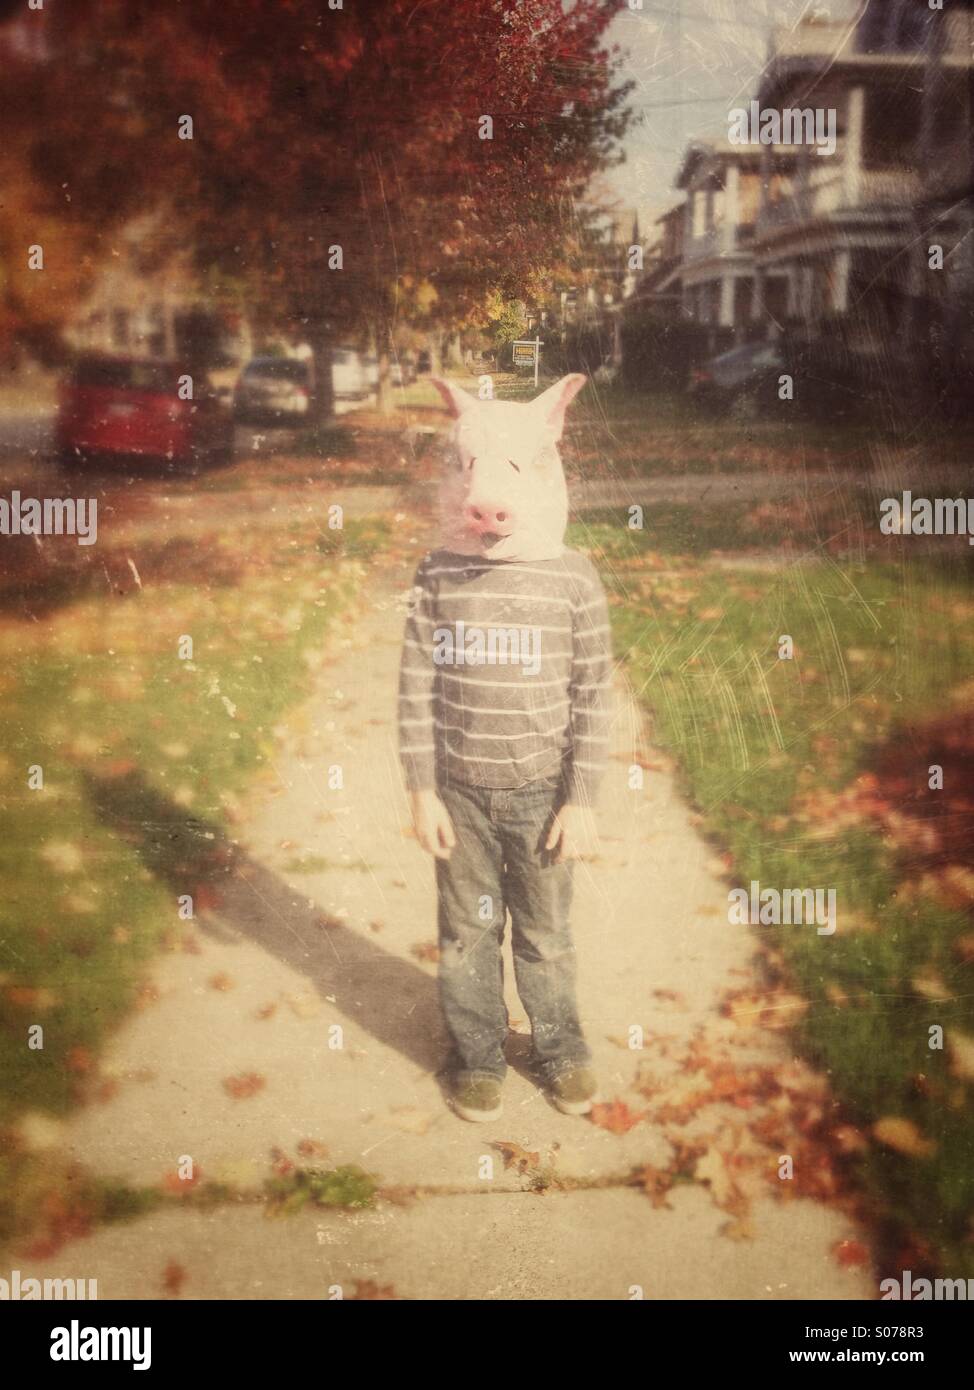 Boy in pig mask on sidewalk Stock Photo